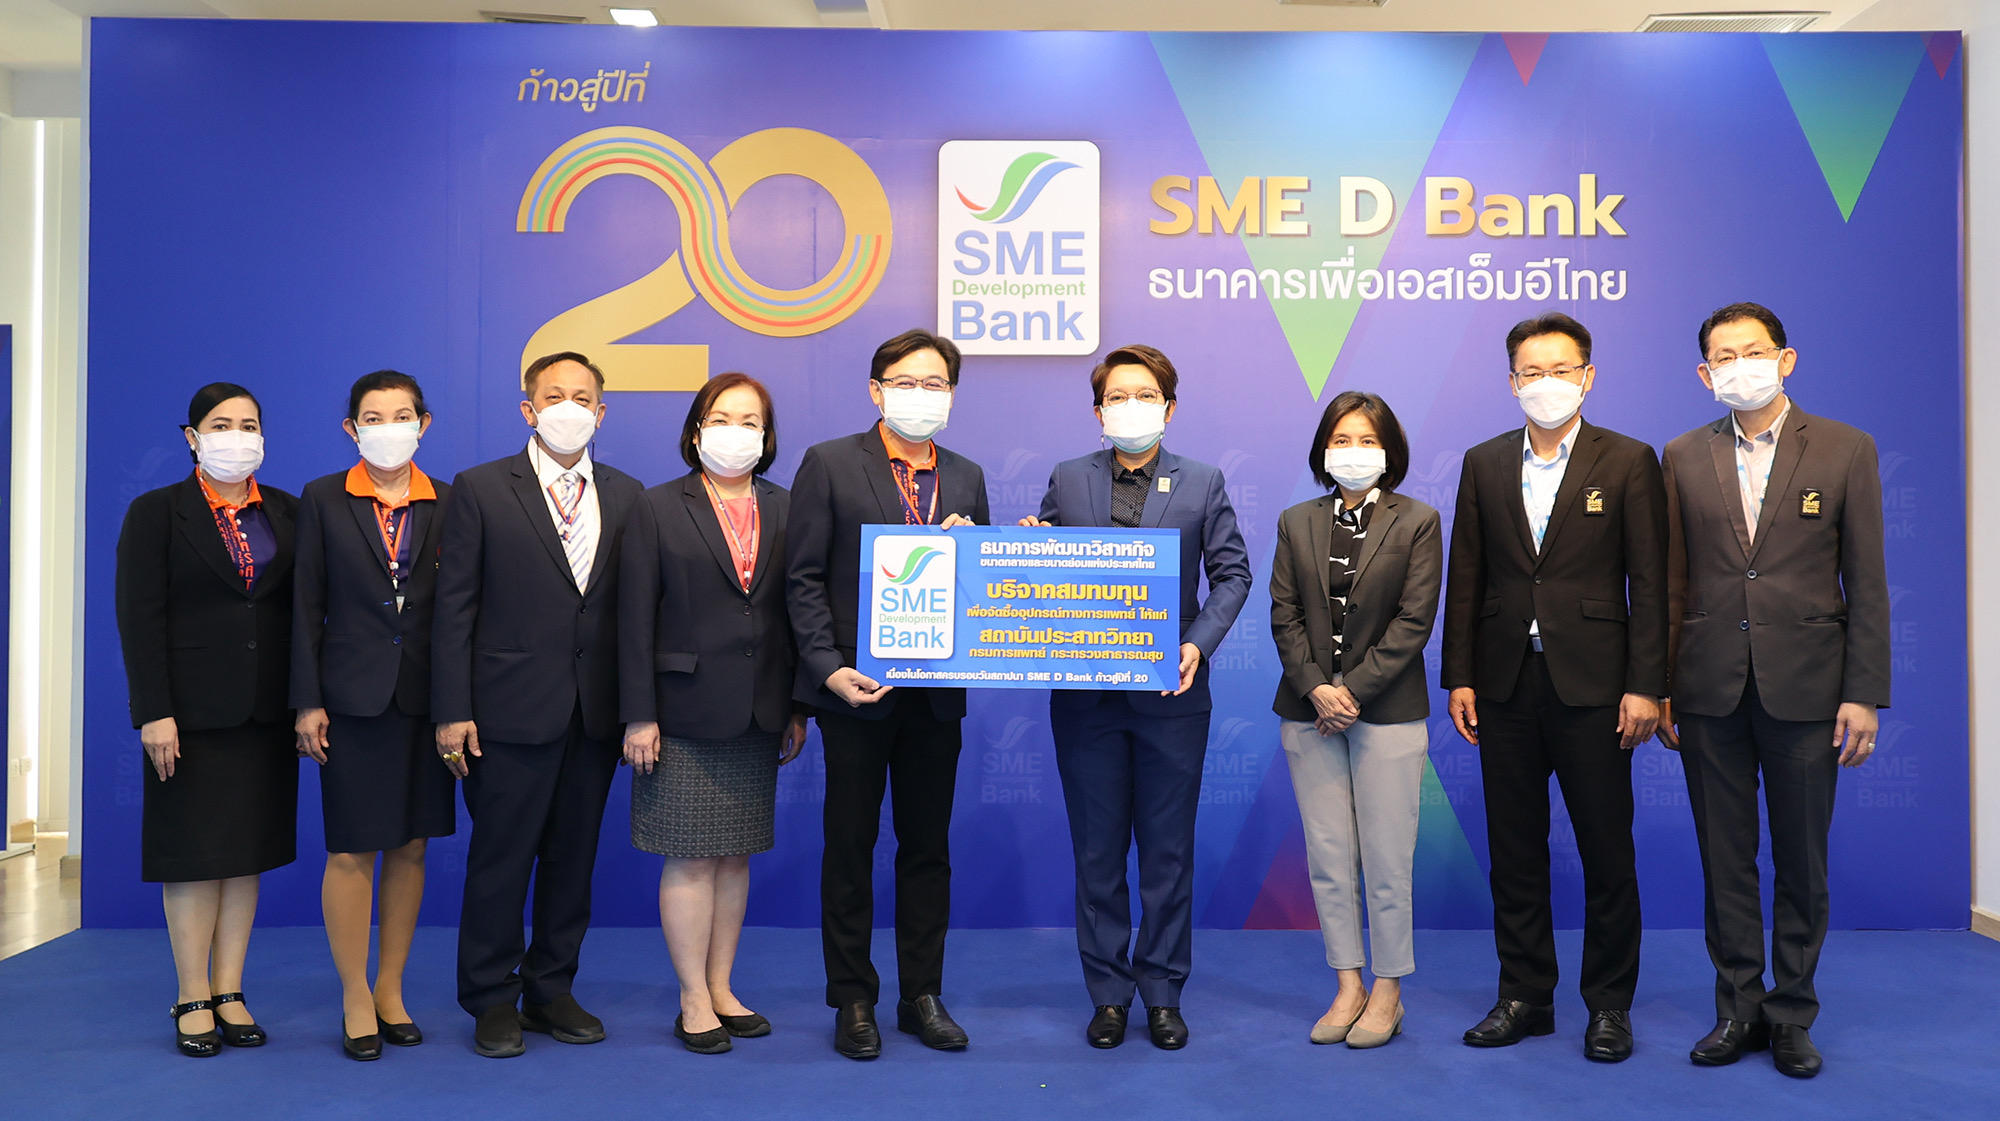 SME D Bank ร่วมสมทบทุน สถาบันประสาทวิทยา ในโอกาสก้าวสู่ปีที่ 20